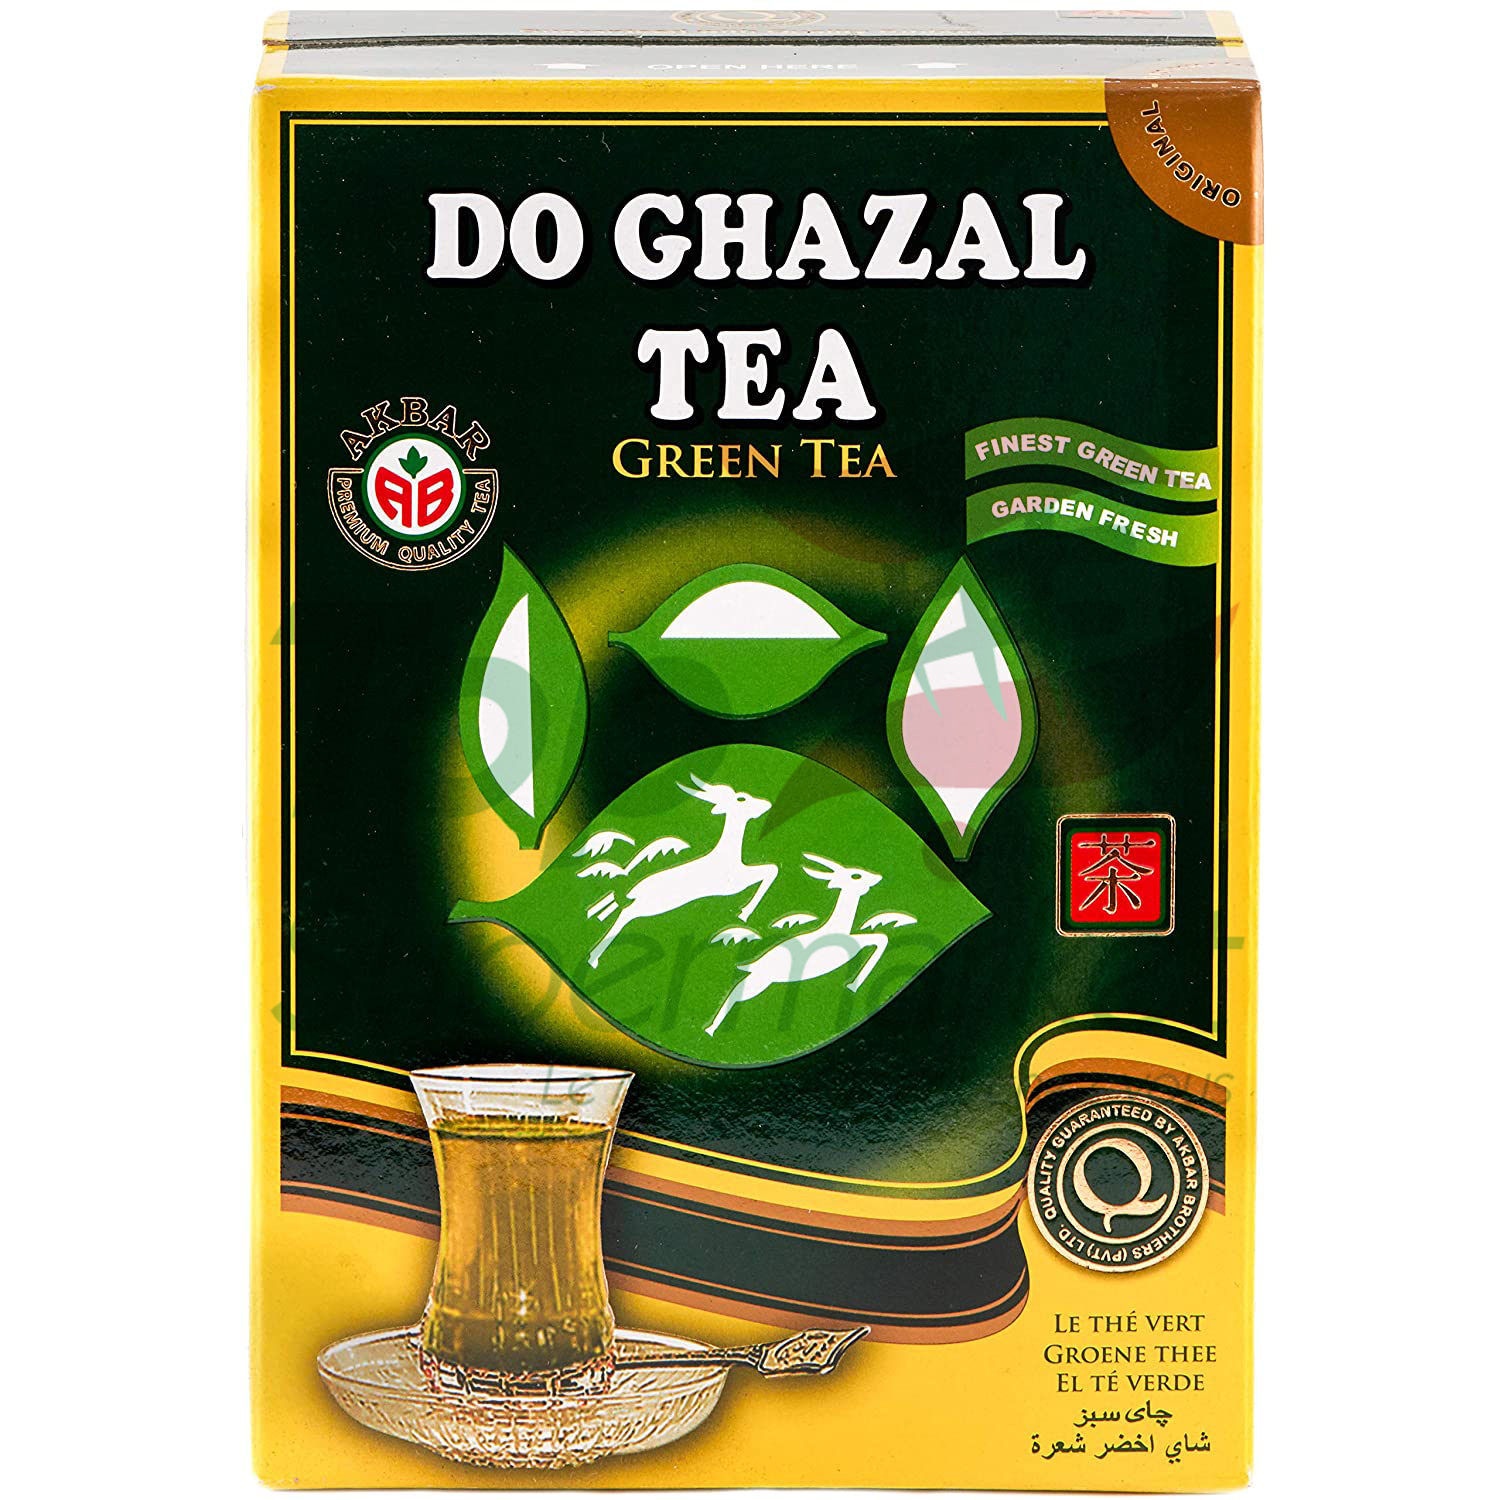 Do Ghazal green tea 500g